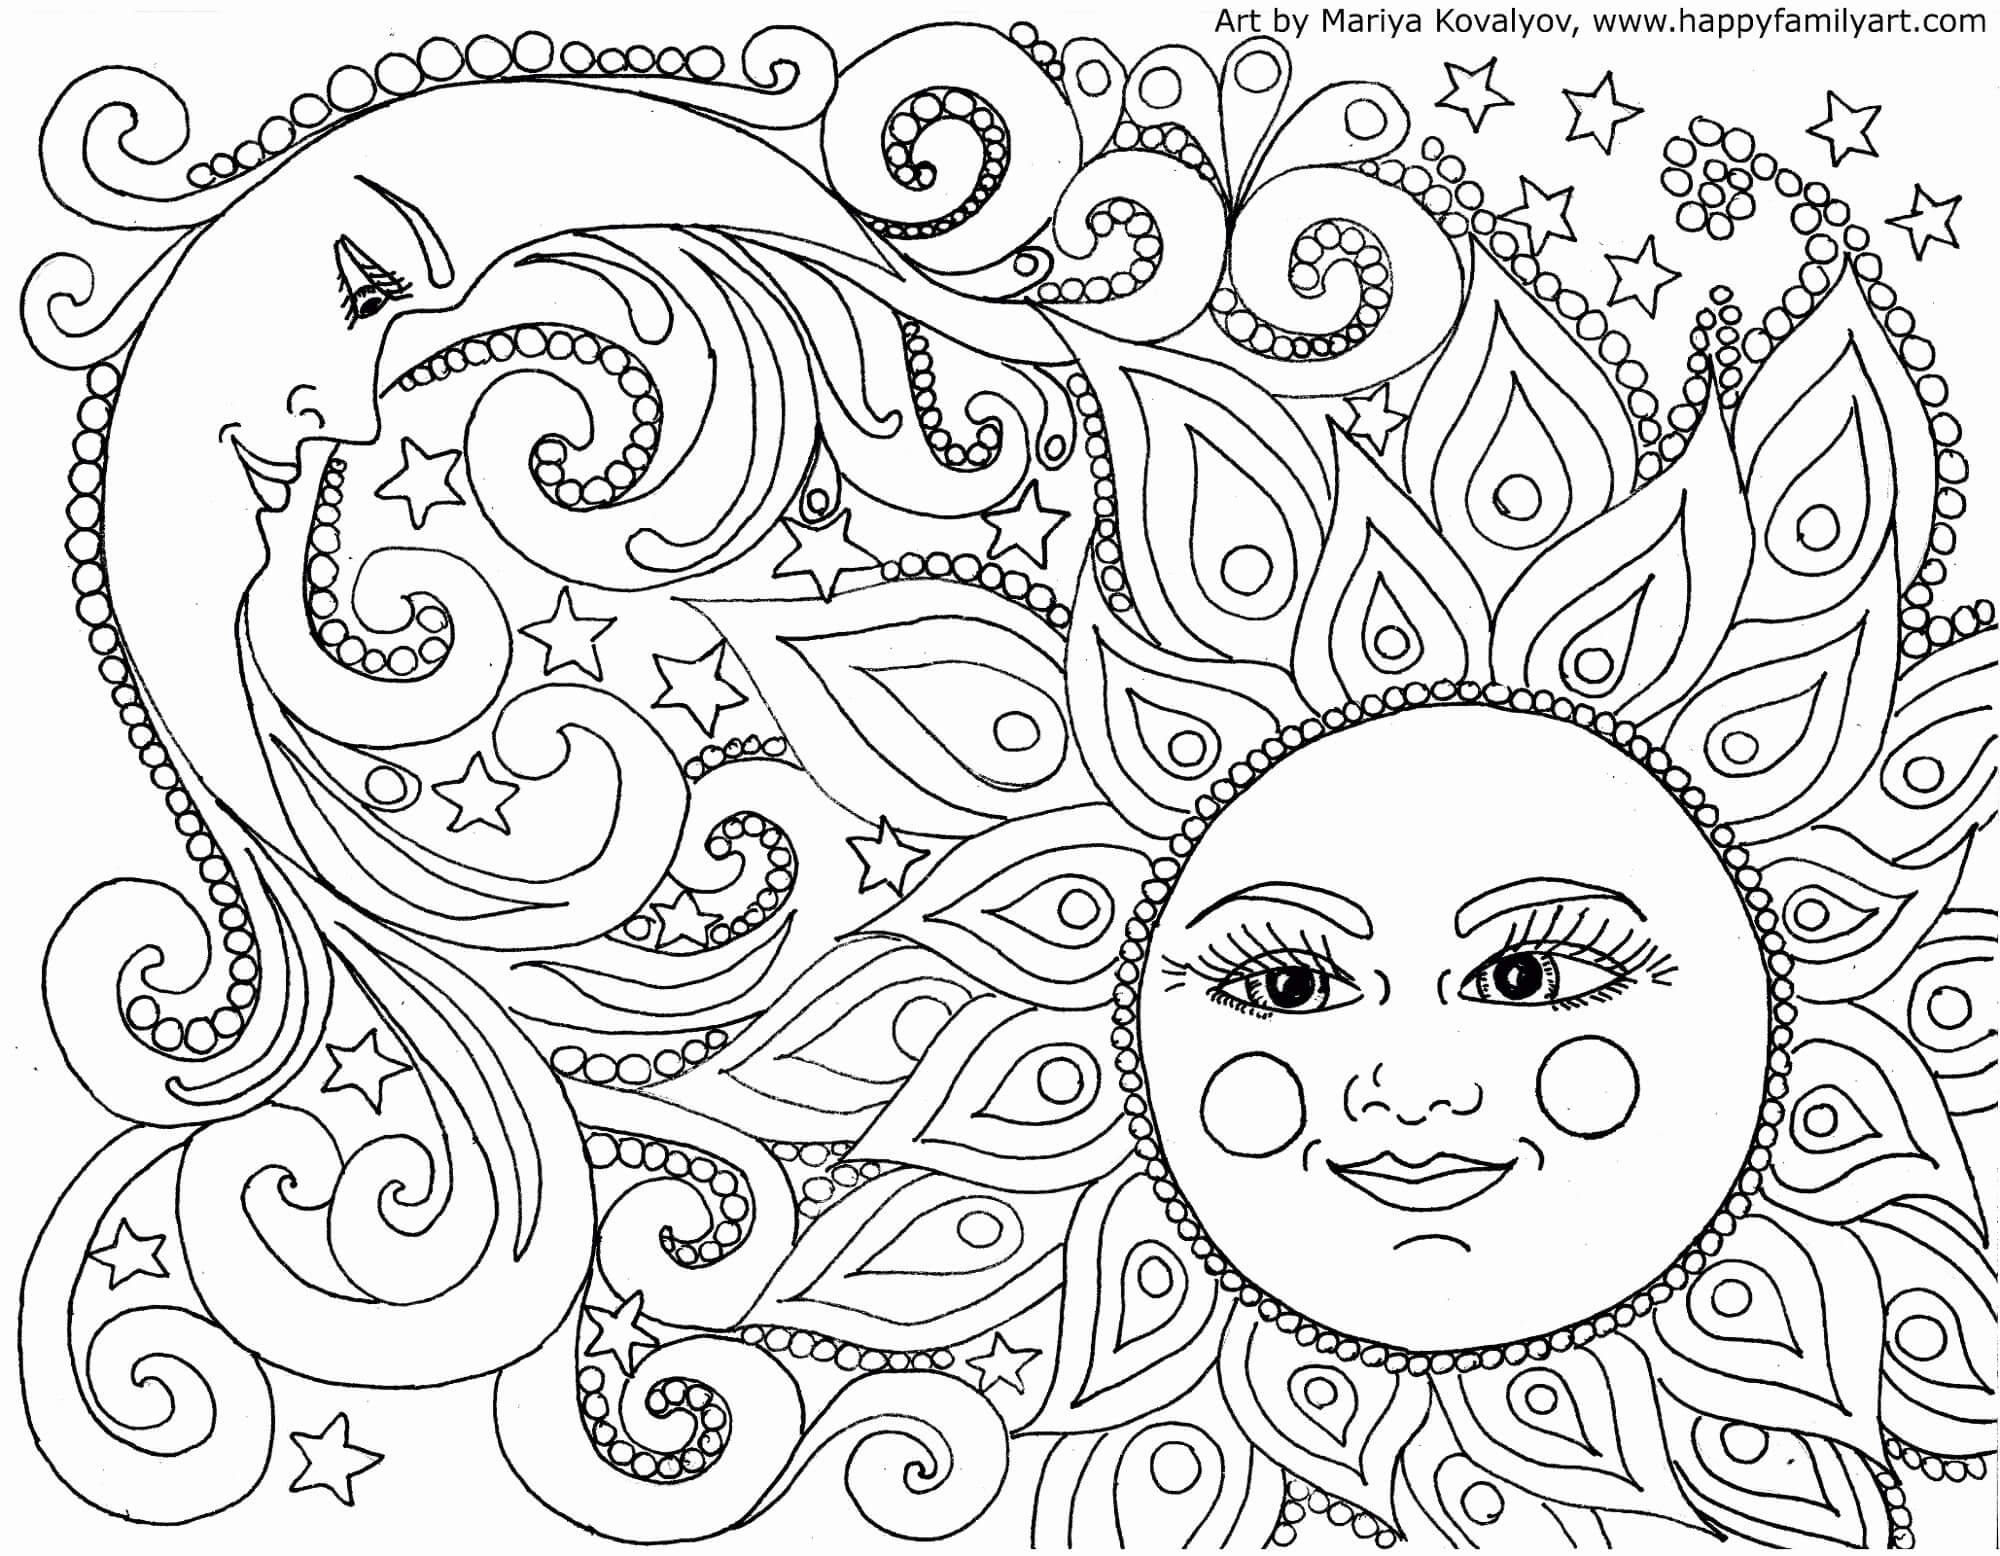 Mandala Sorridente de sol e Lua para colorir